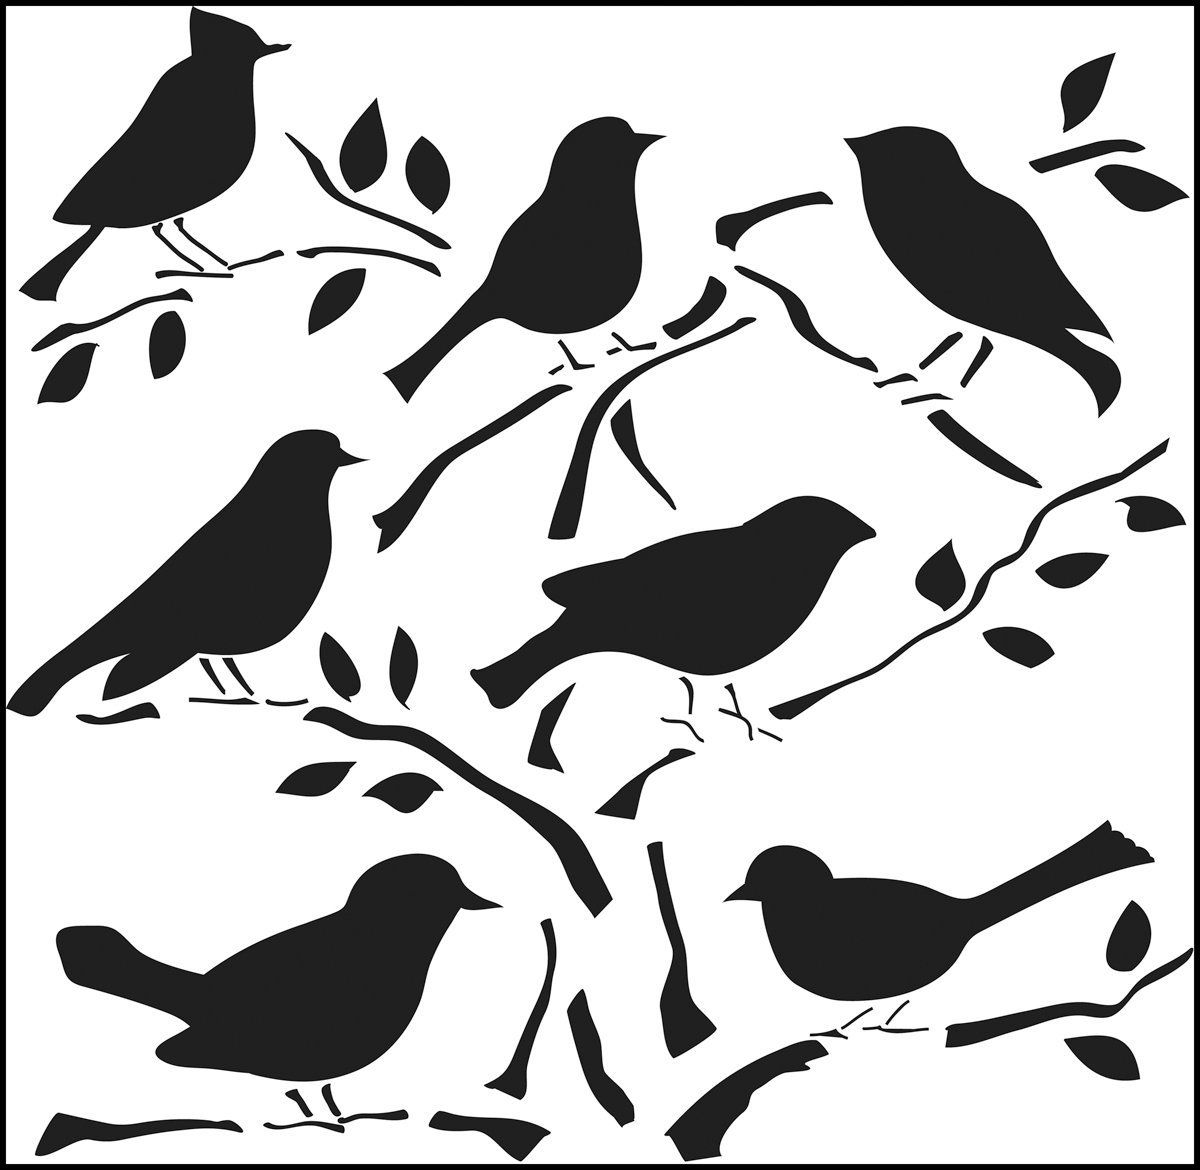 The Crafters Workshop Stencil Birds 12 x 12 inch